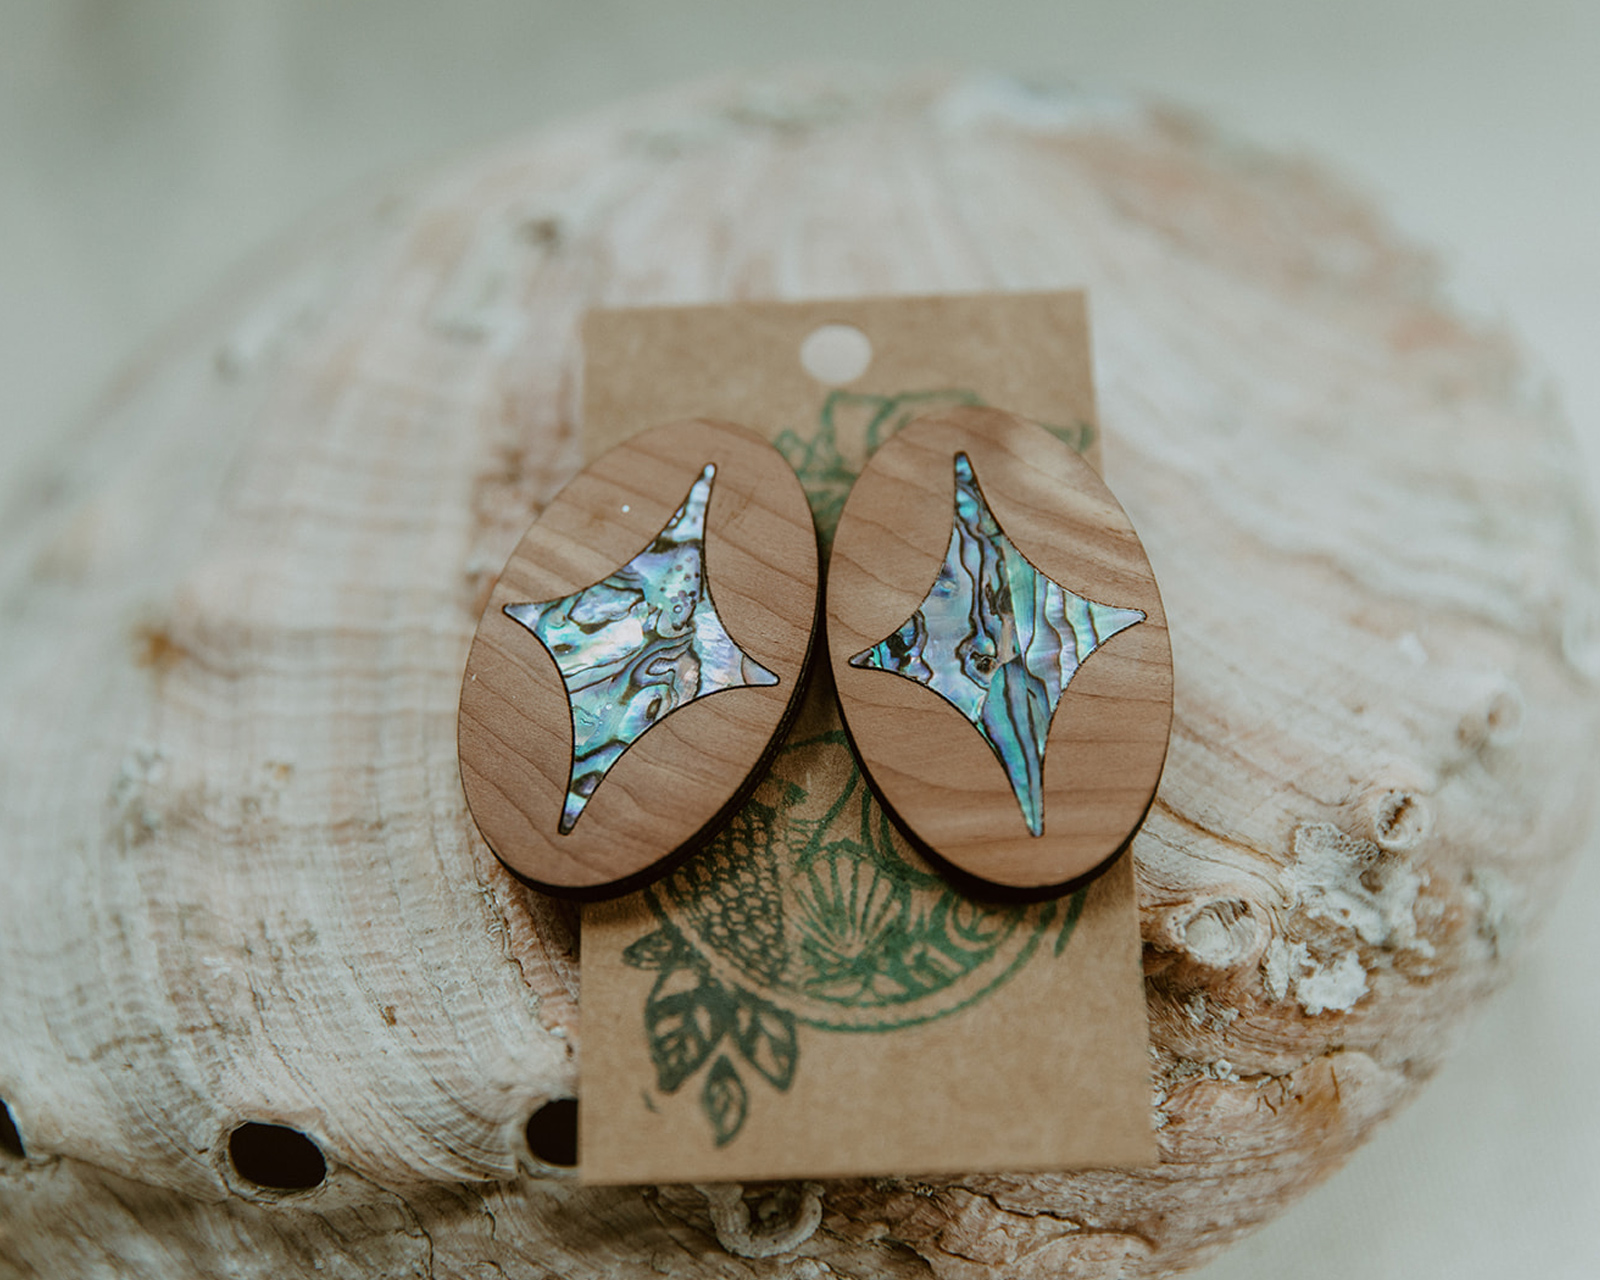 Ovular cedar post earrings with an abalone four-pointed star shape